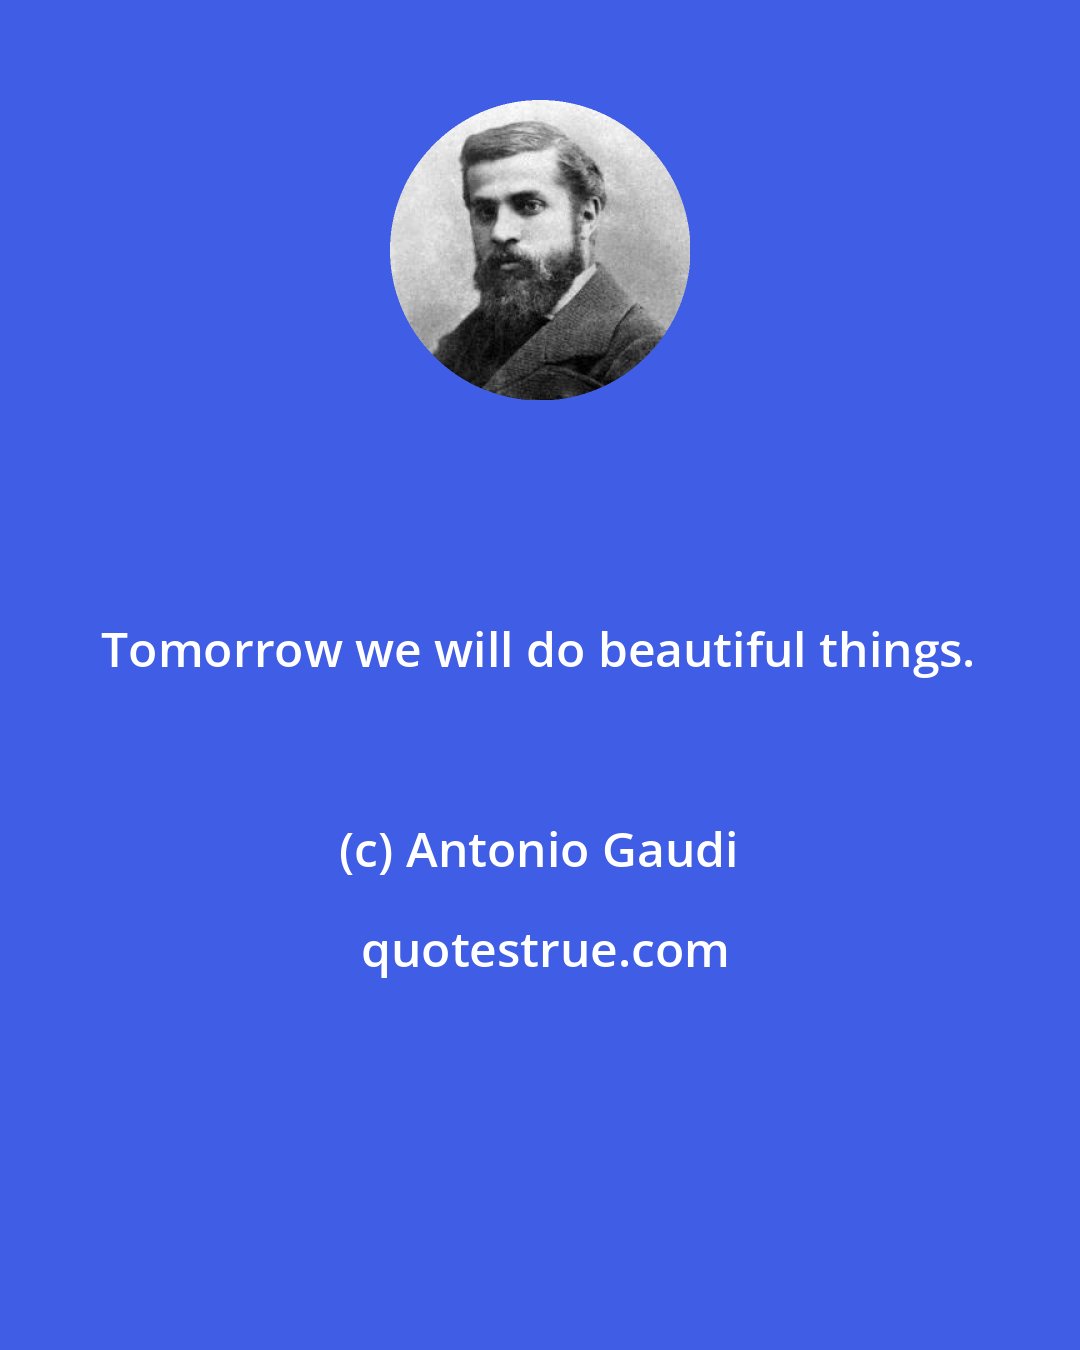 Antonio Gaudi: Tomorrow we will do beautiful things.